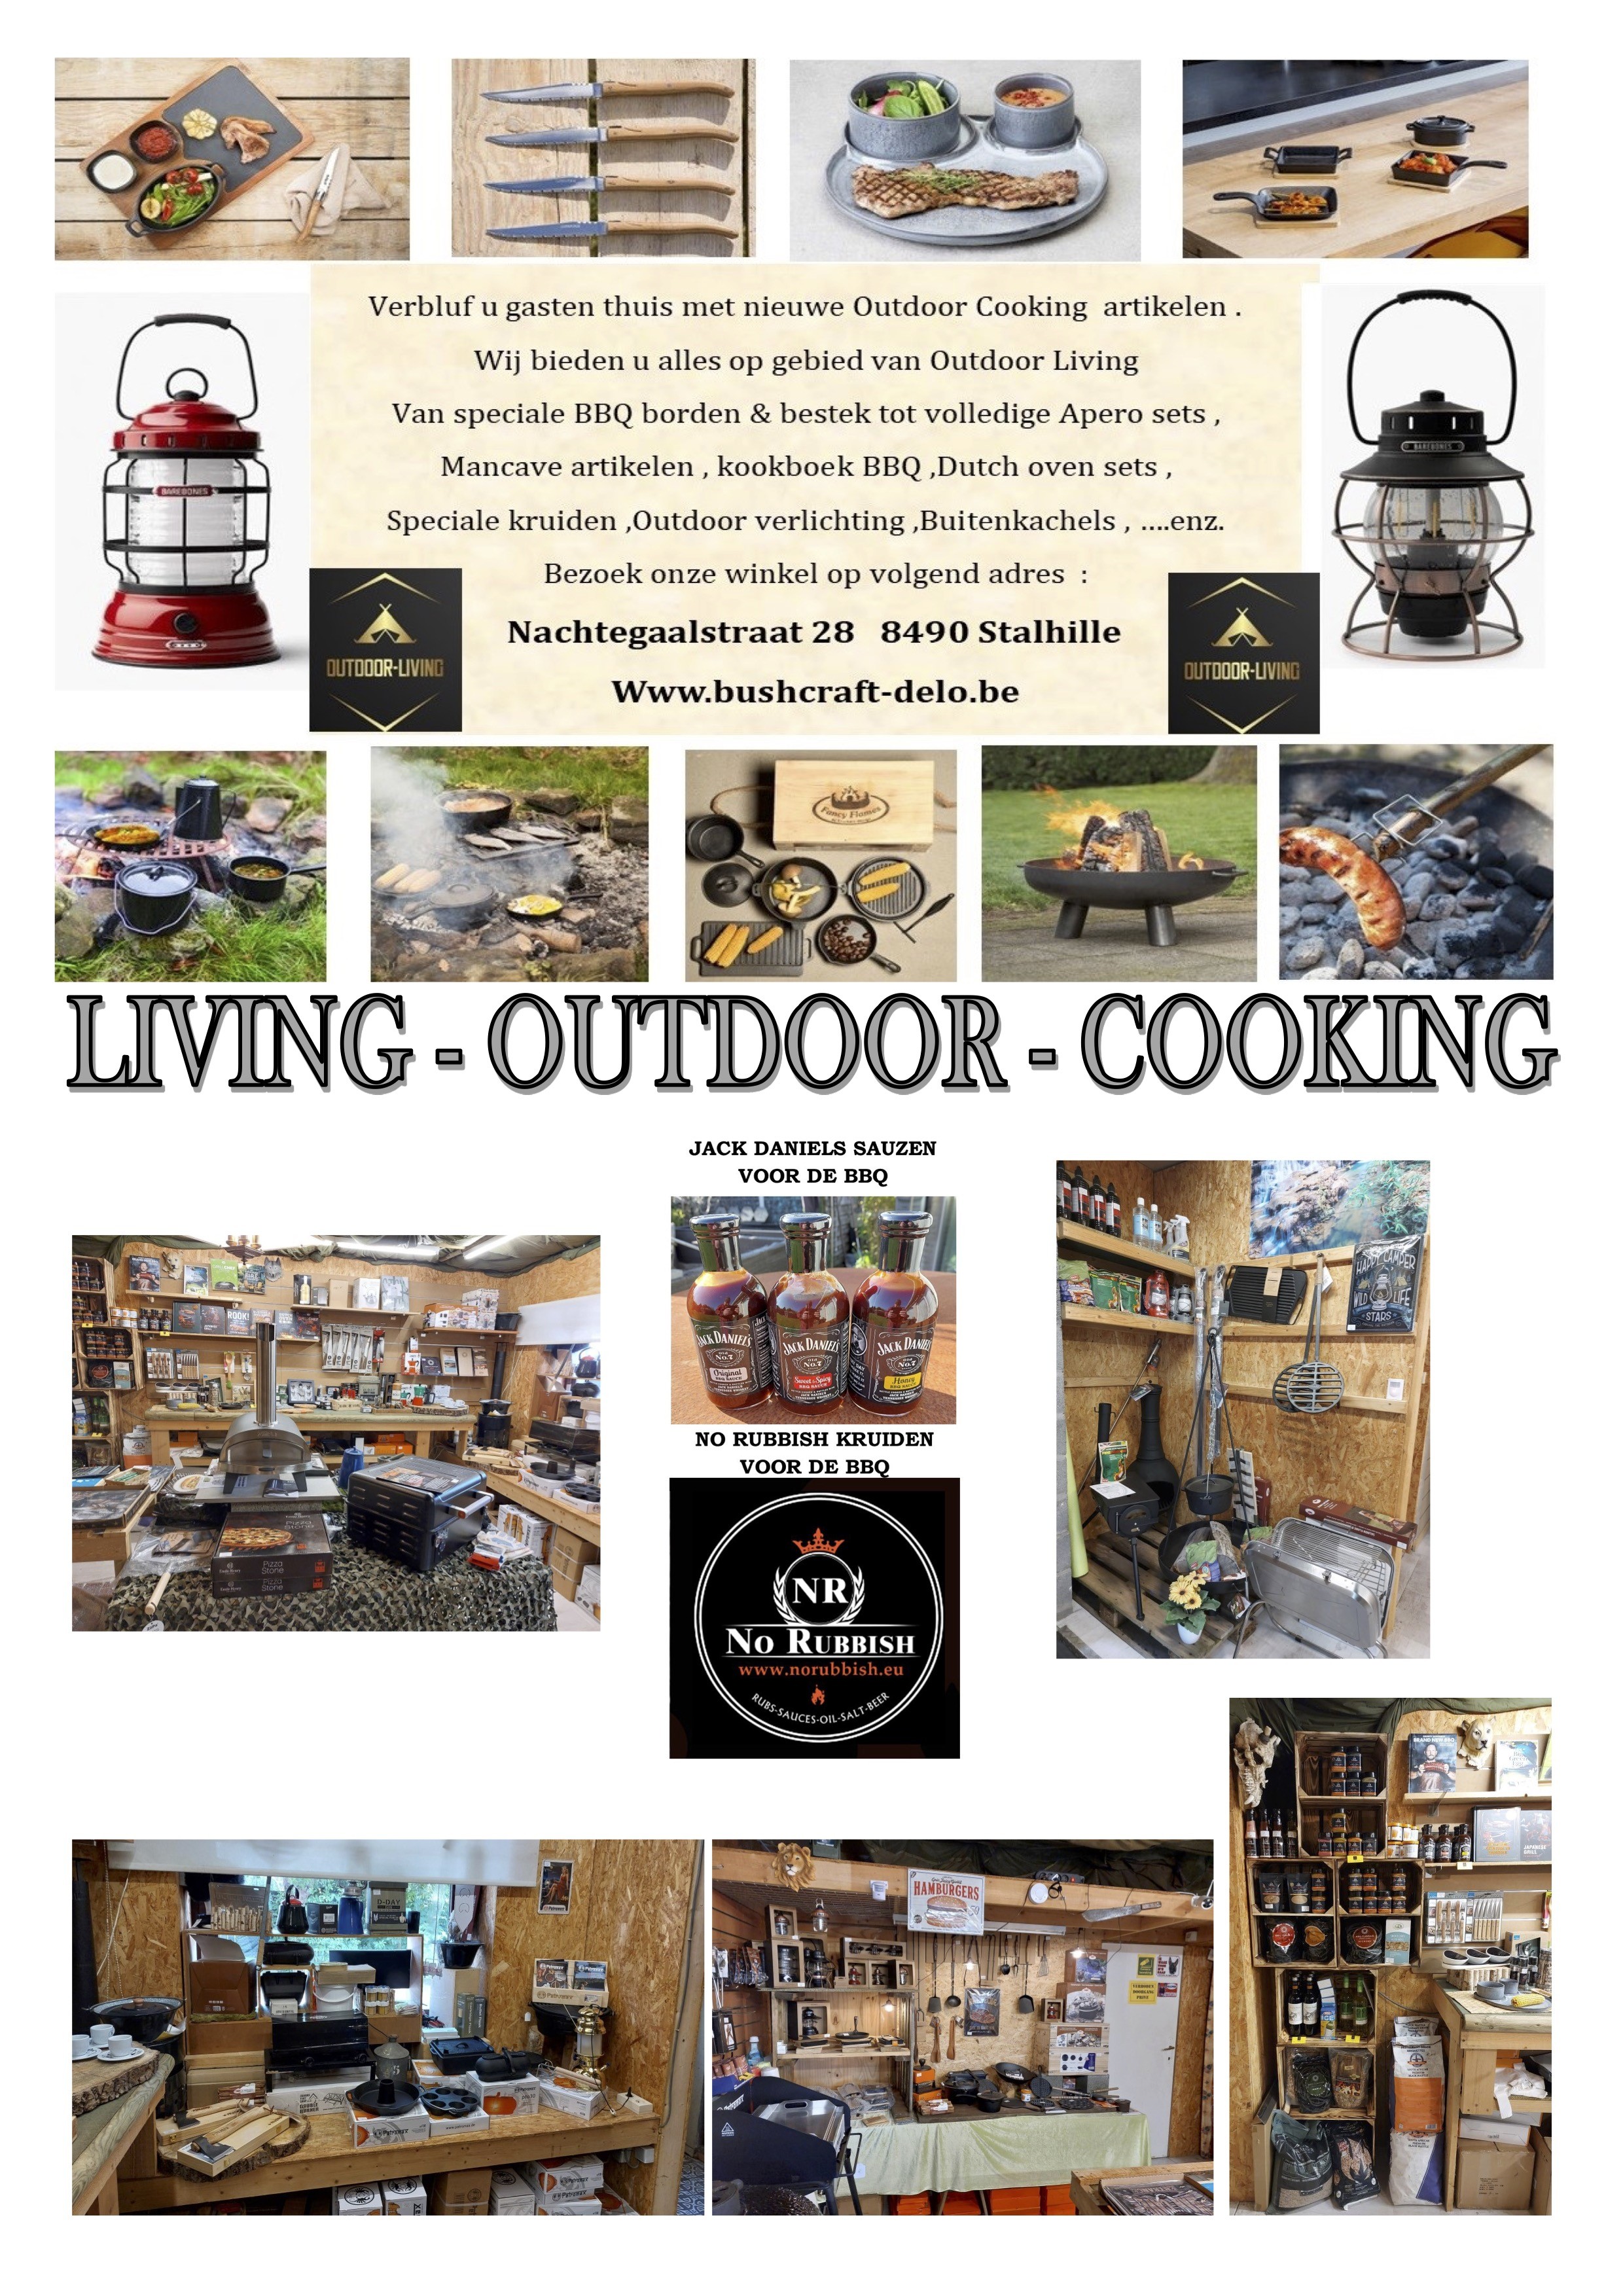 Outdoor Cooking & Living